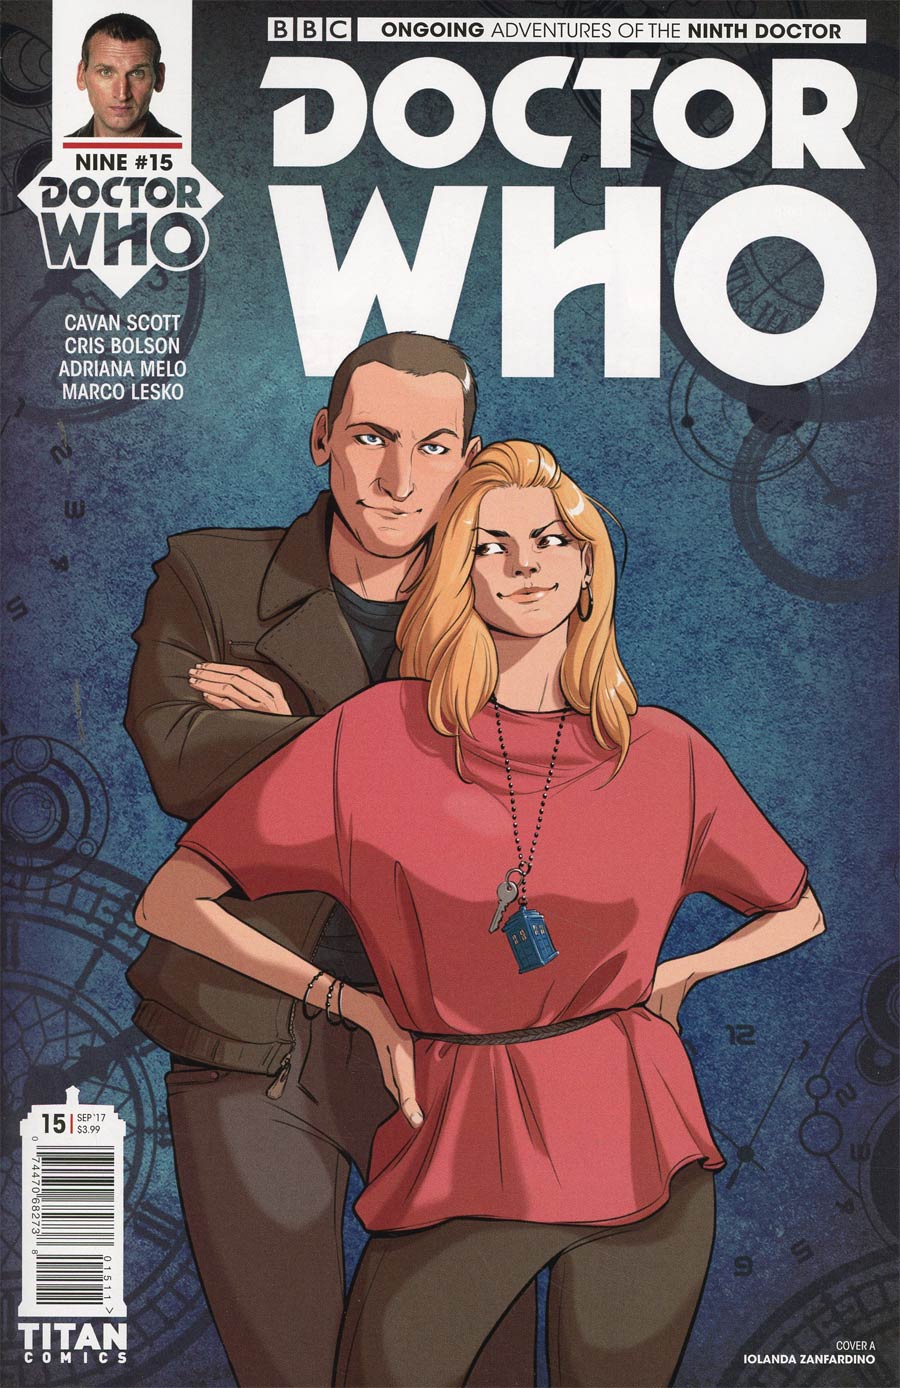 Doctor Who 9th Doctor Vol 2 #15 Cover A Regular Iolanda Zanfardino Cover